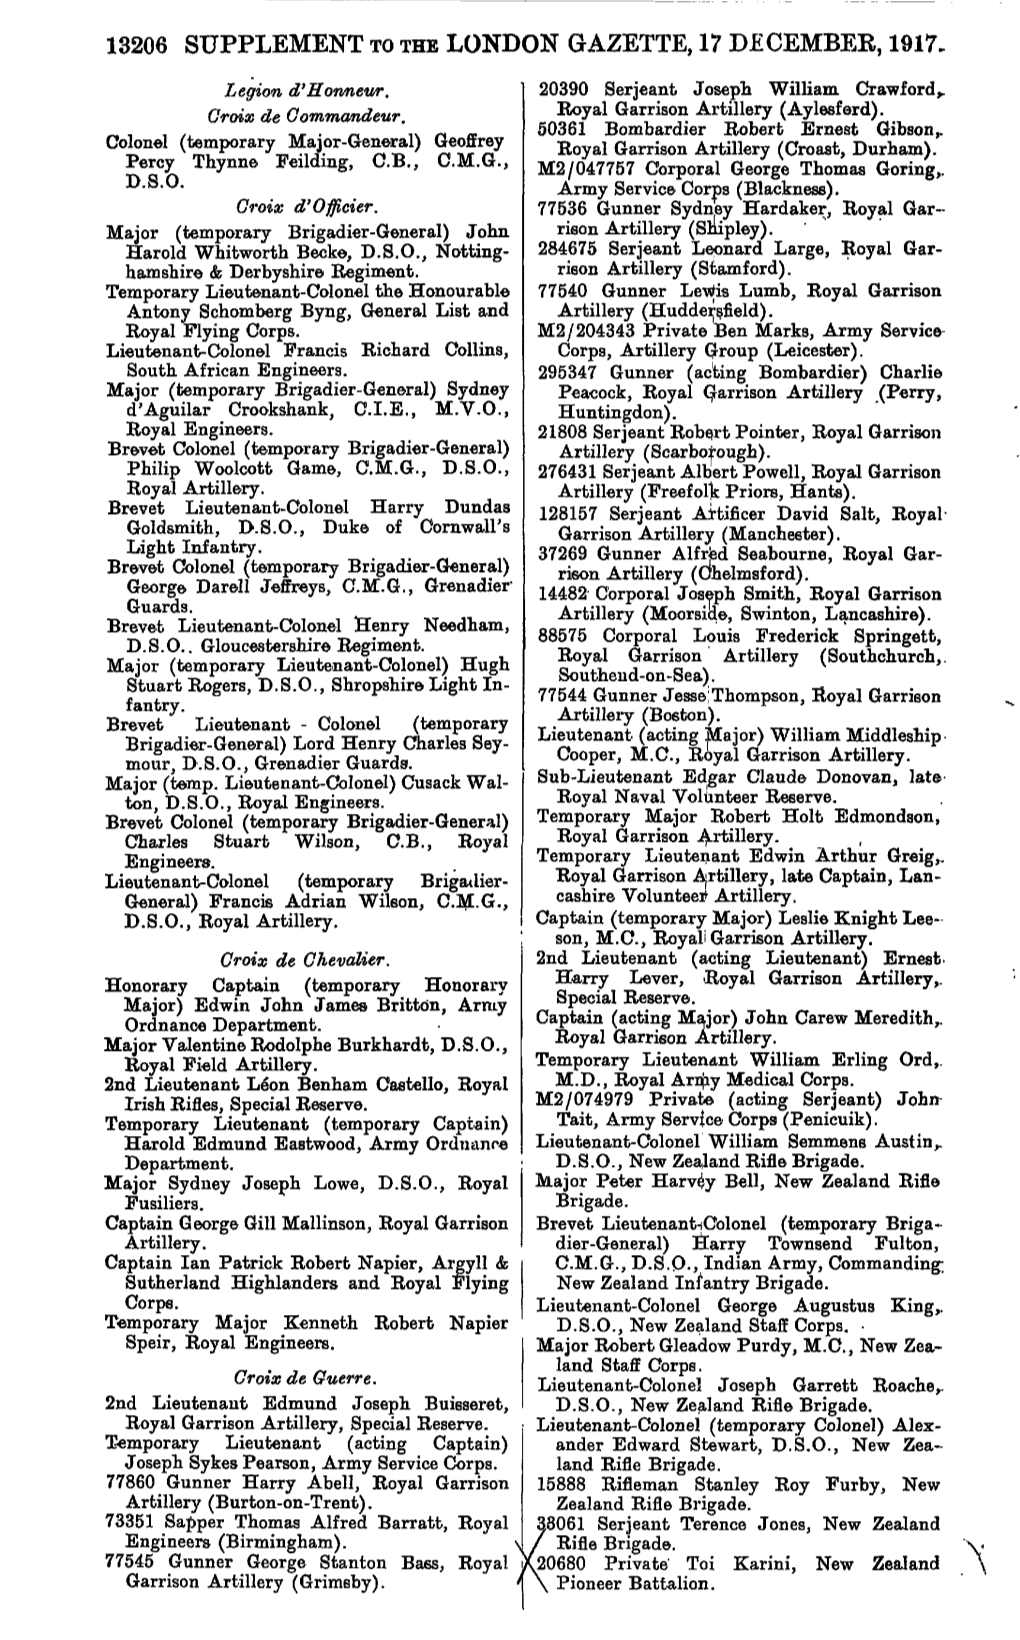 13206 Supplement to the London Gazette, 17 December, 1917